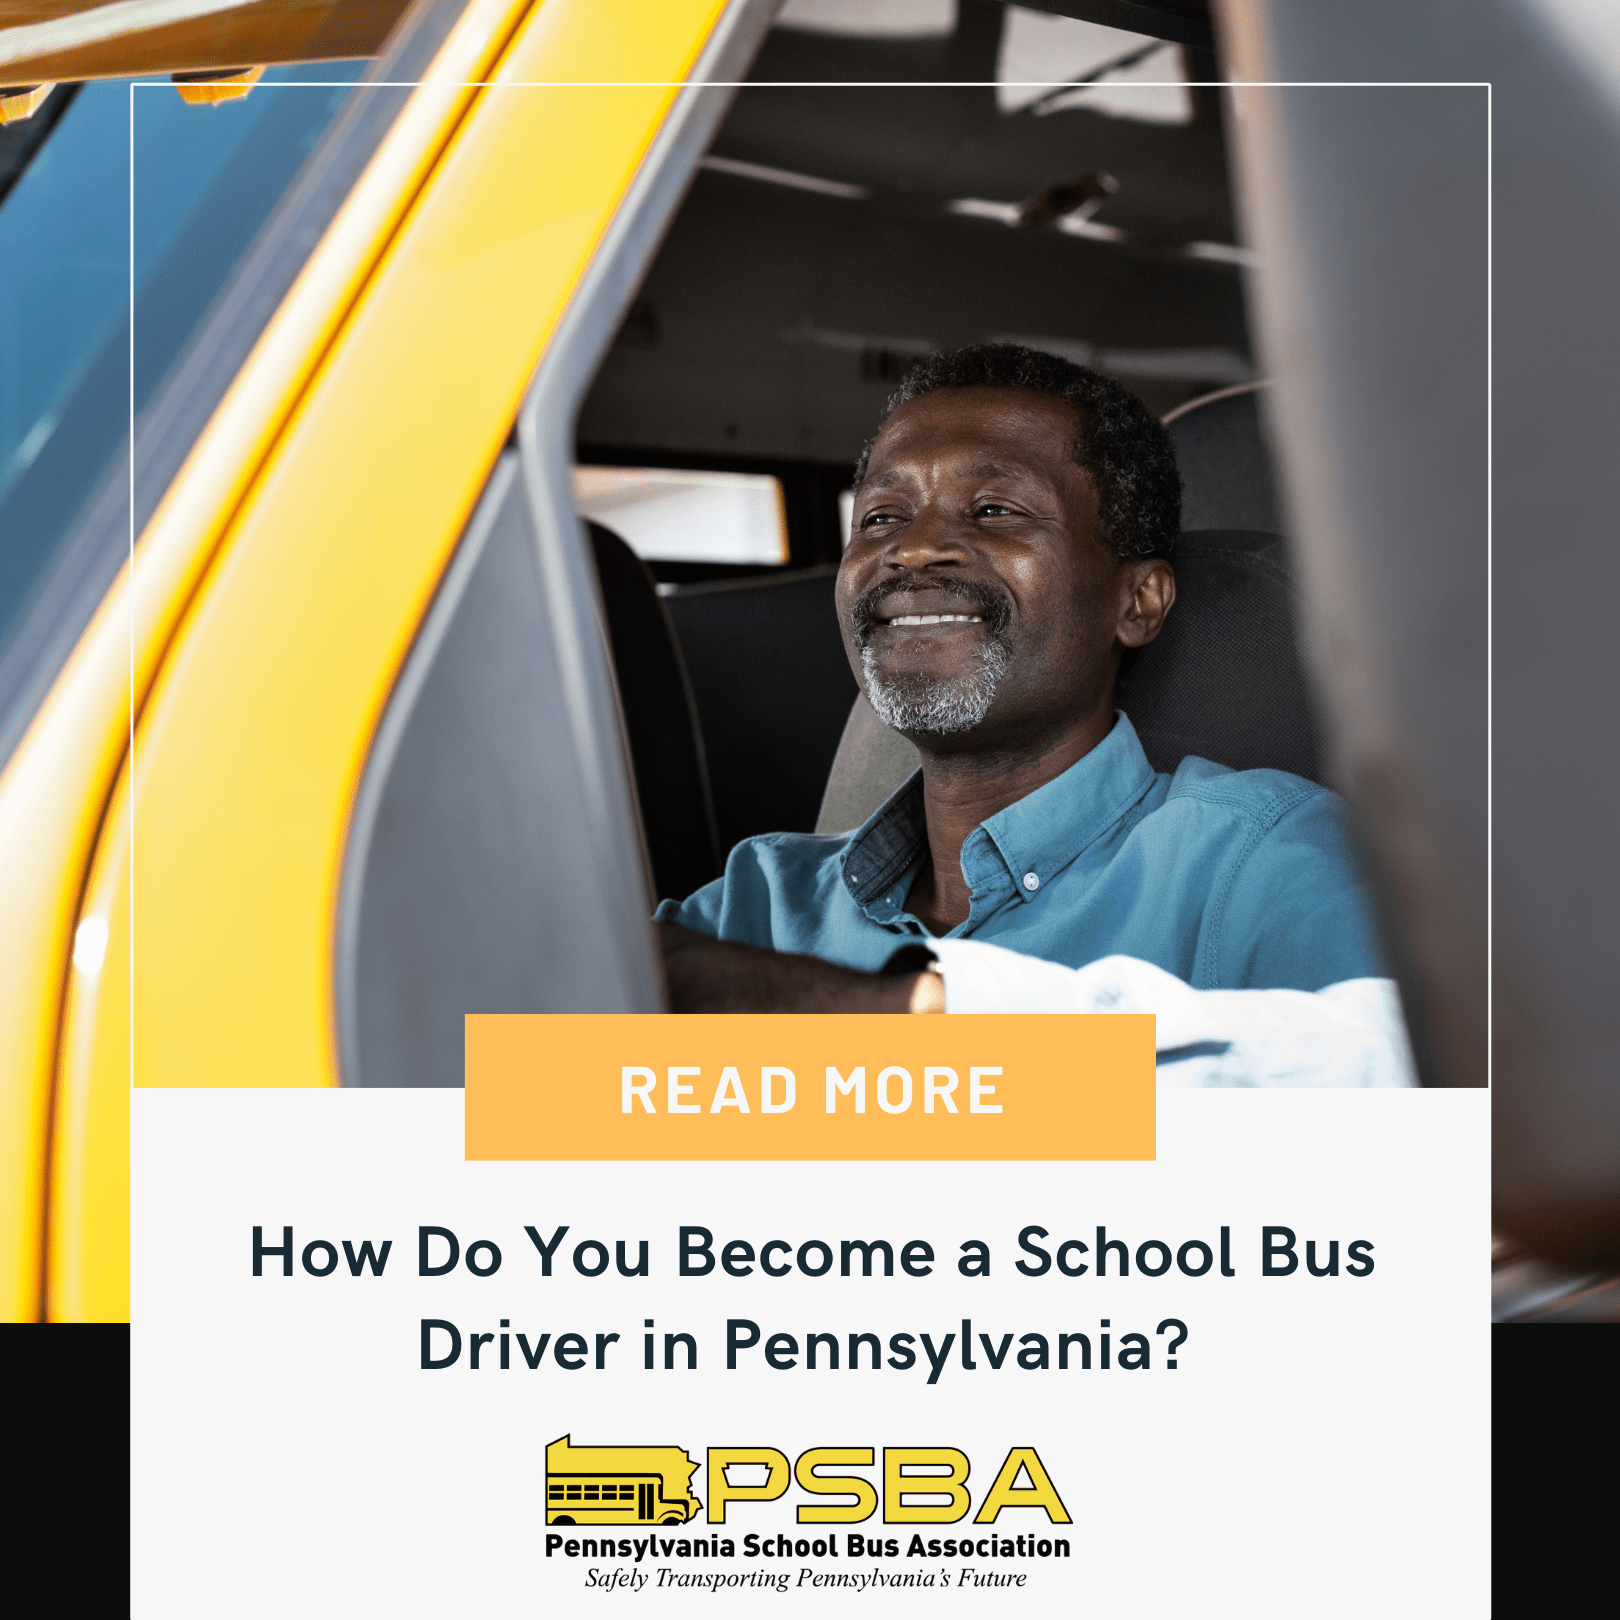 How Do You Become a School Bus Driver in Pennsylvania?